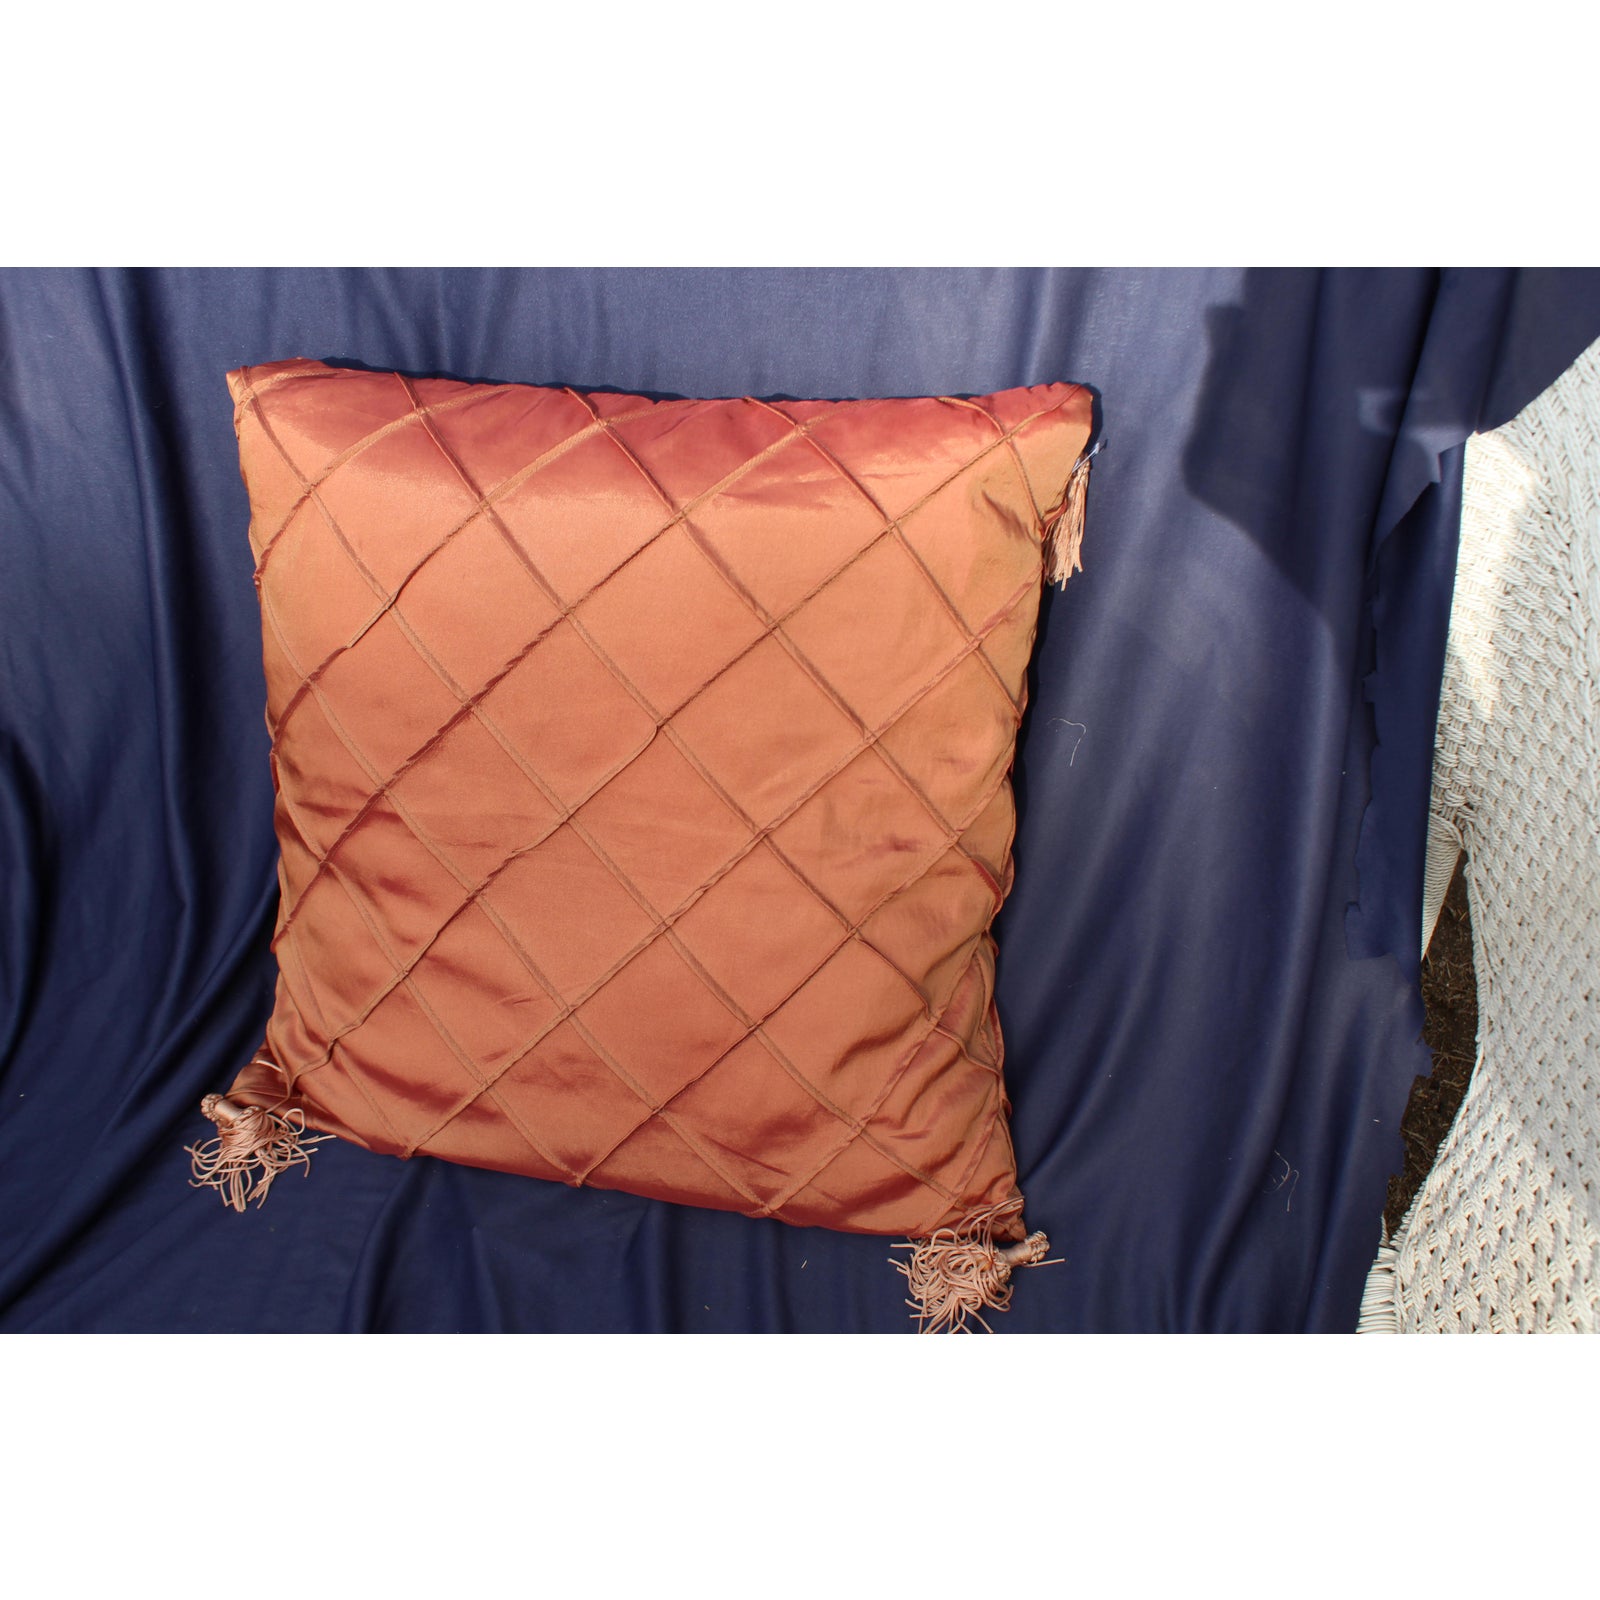 late-20th-c-down-argyle-pattern-pillow-2281